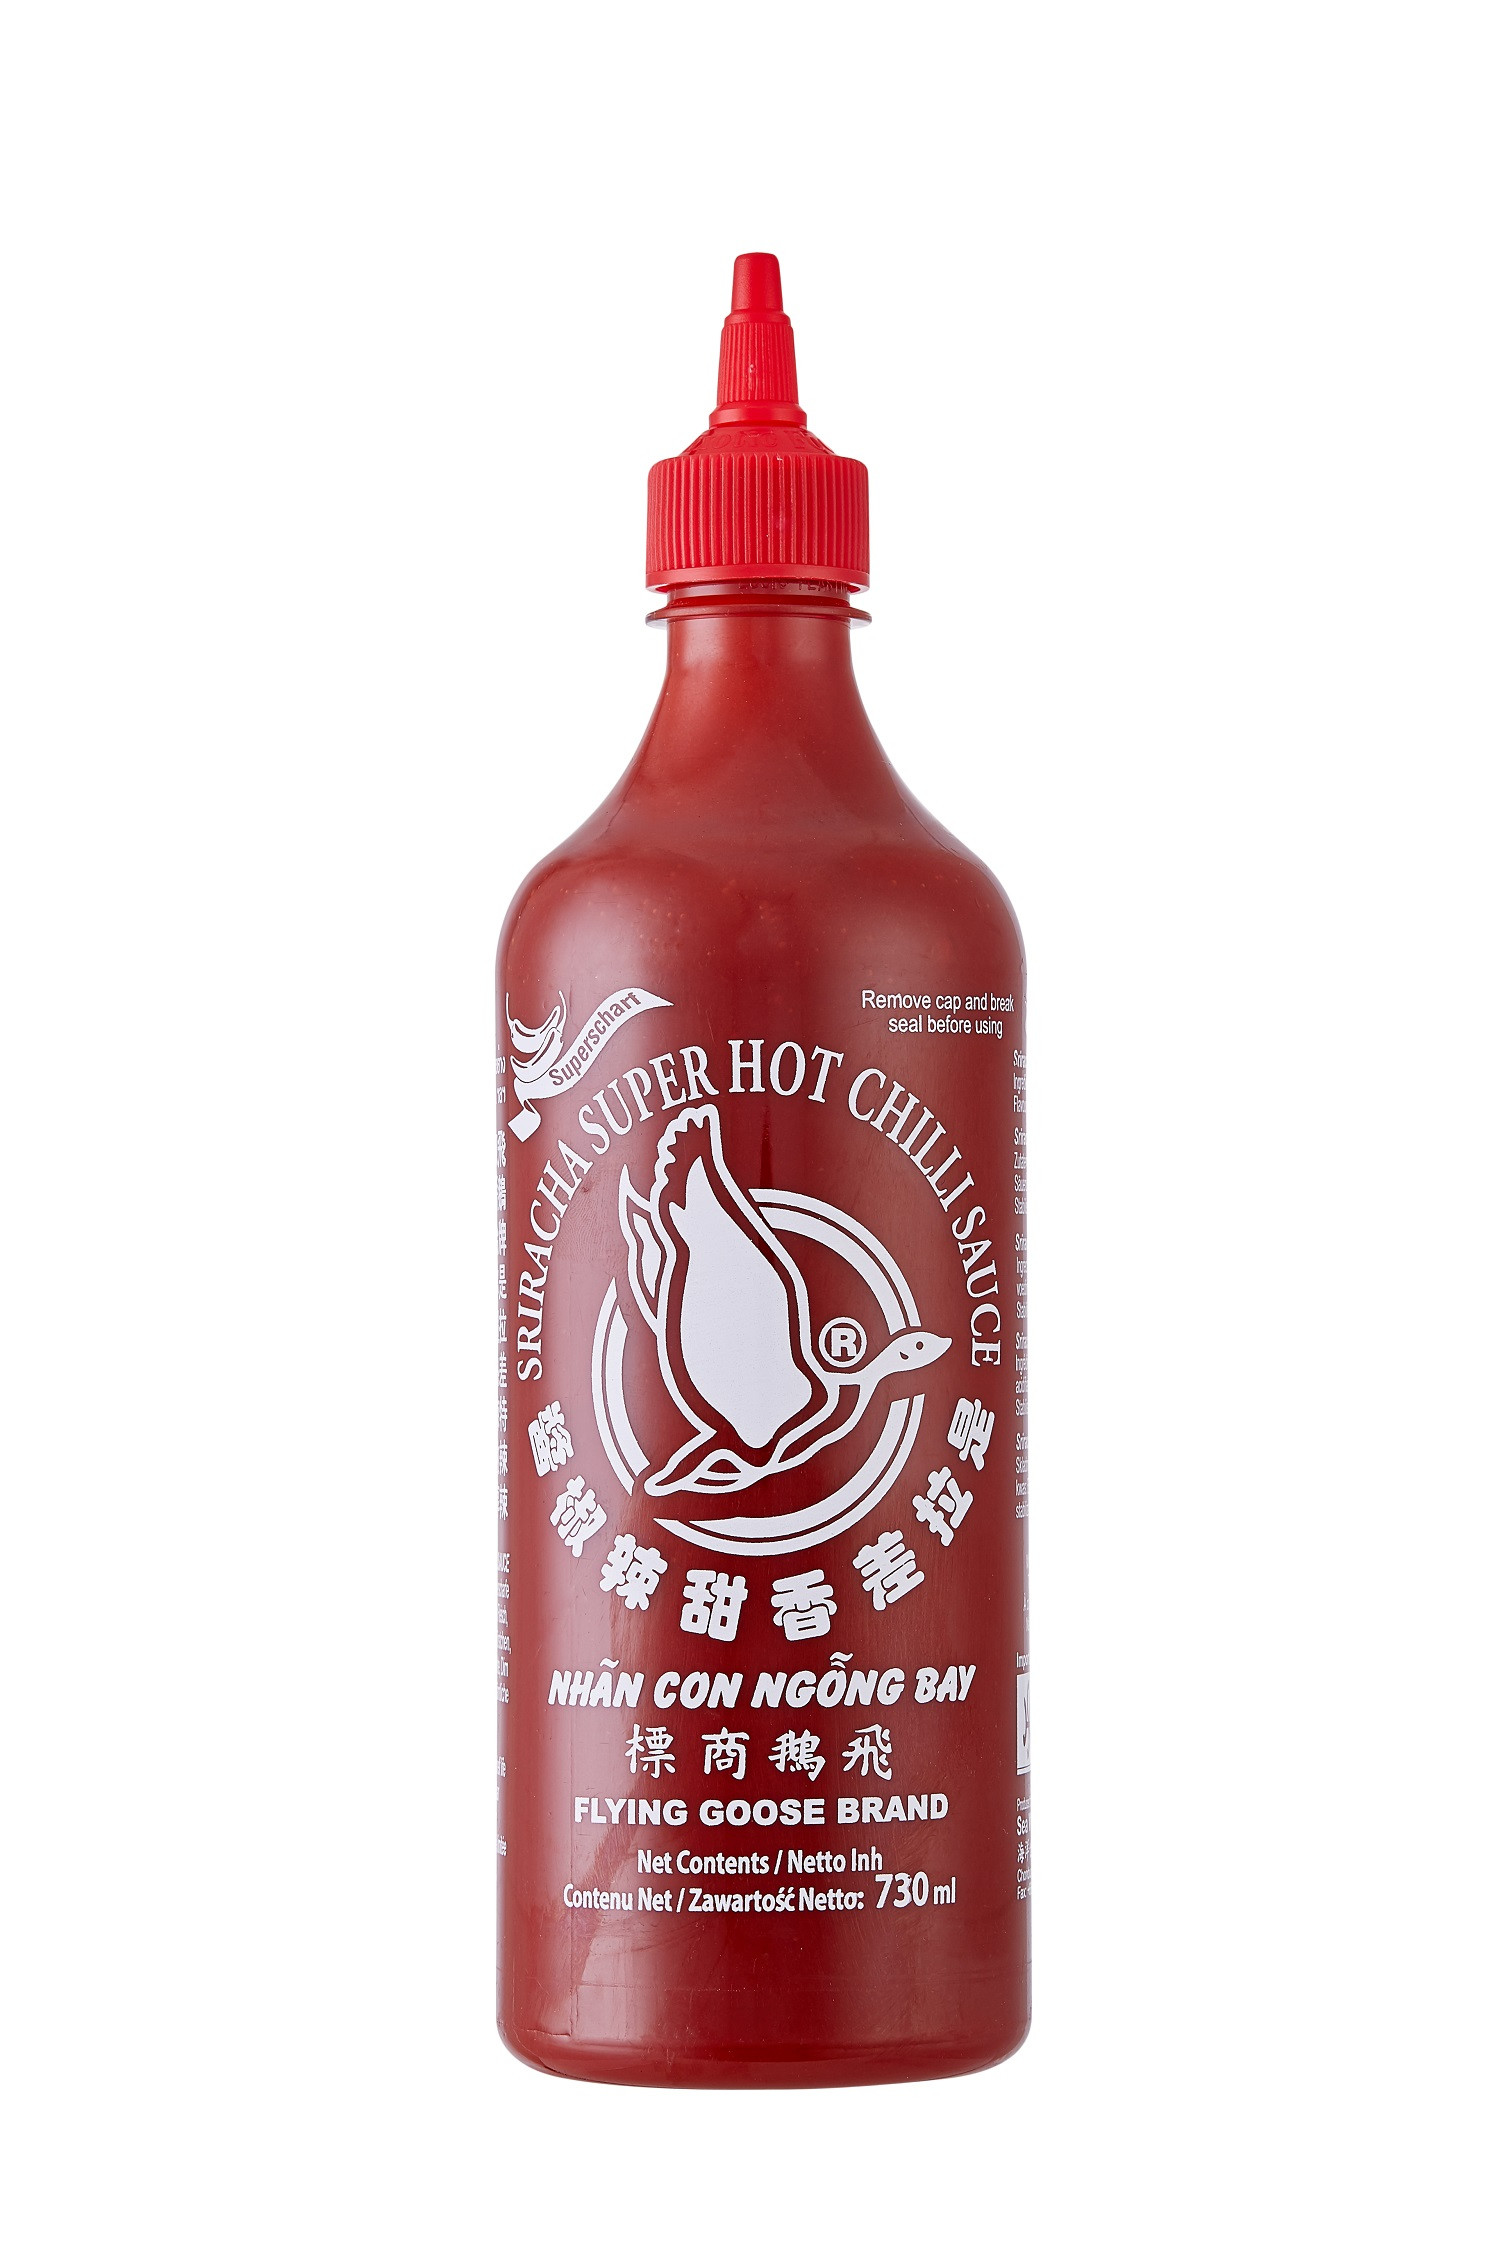 Sauce Sriracha Super Hot Chili 730ml Flying Goose Brand